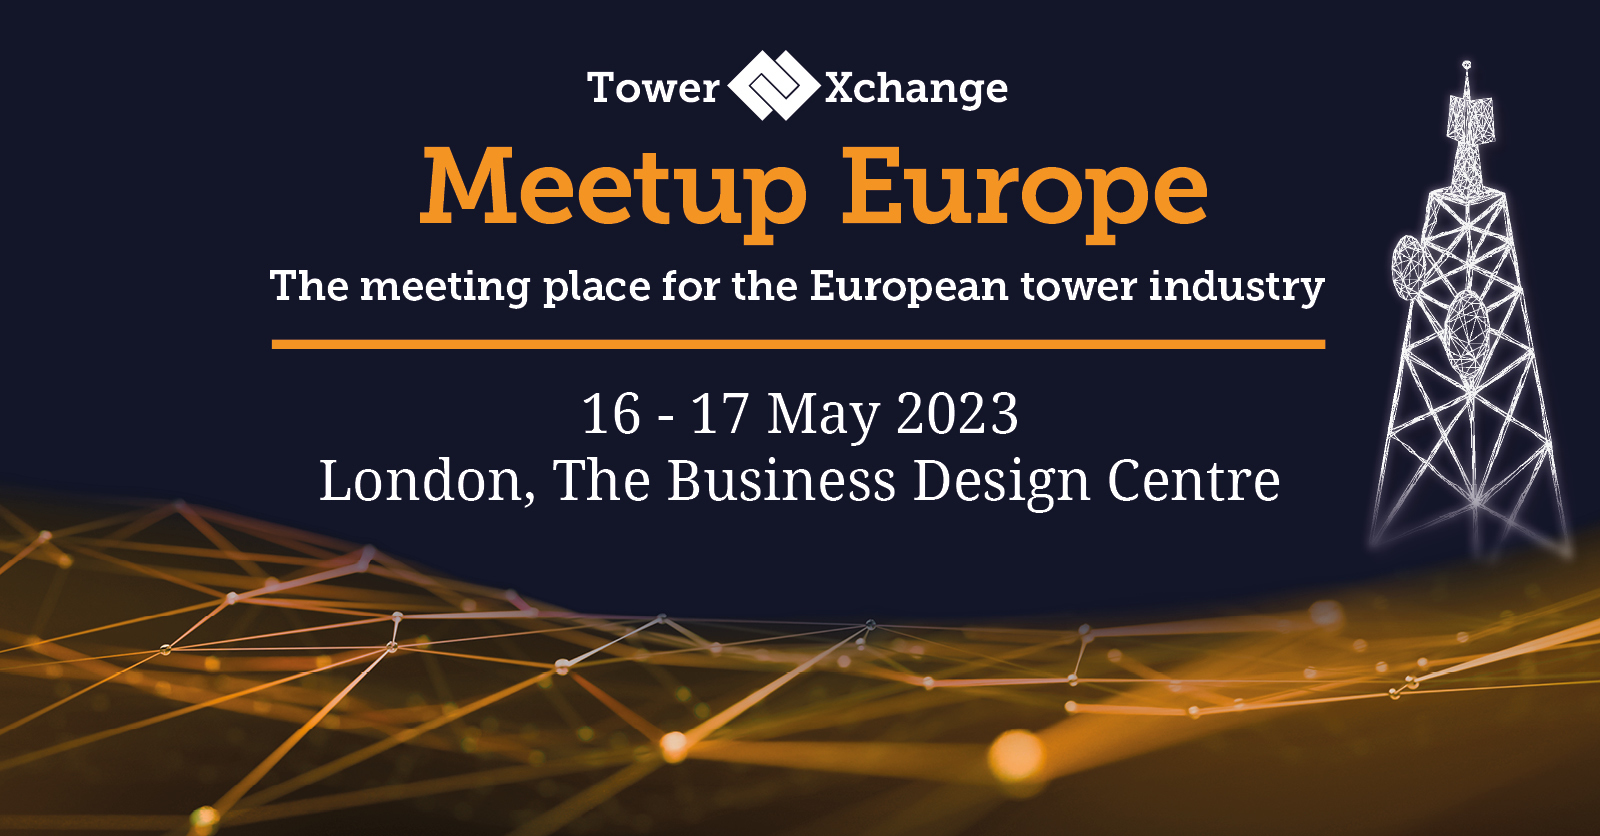 TowerXchange Meetup Europe 2023, London, United Kingdom